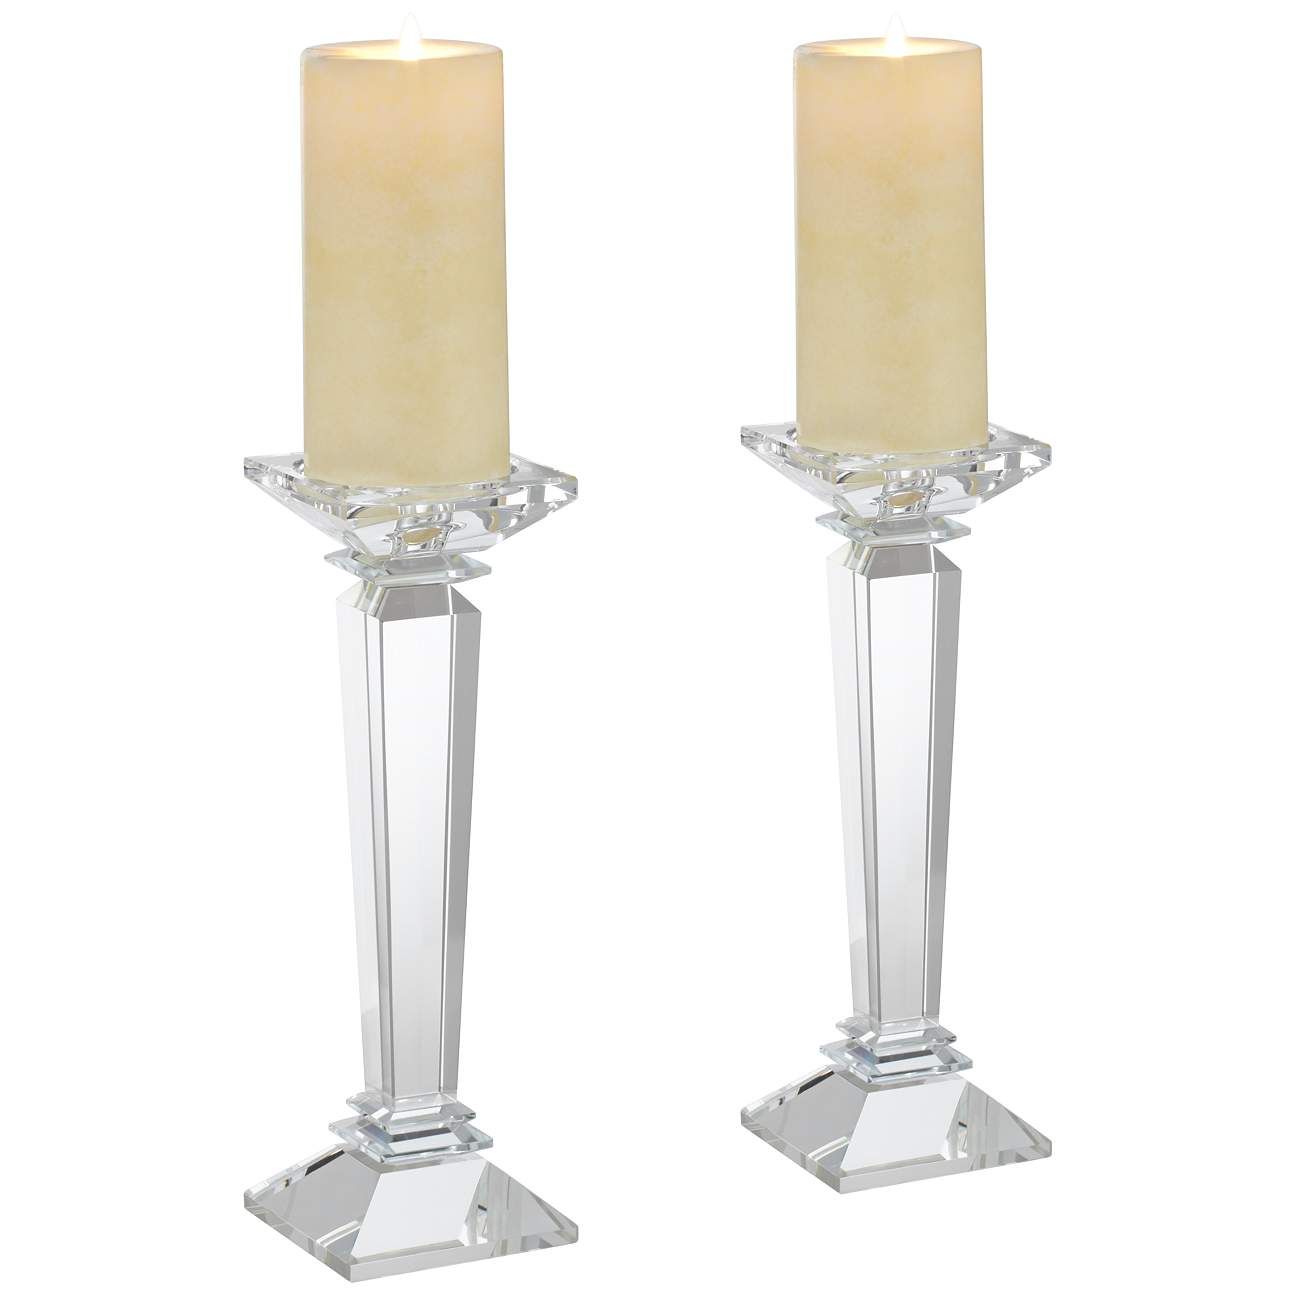 Portia 11" High Crystal Candle Holders Set of 2 | LampsPlus.com